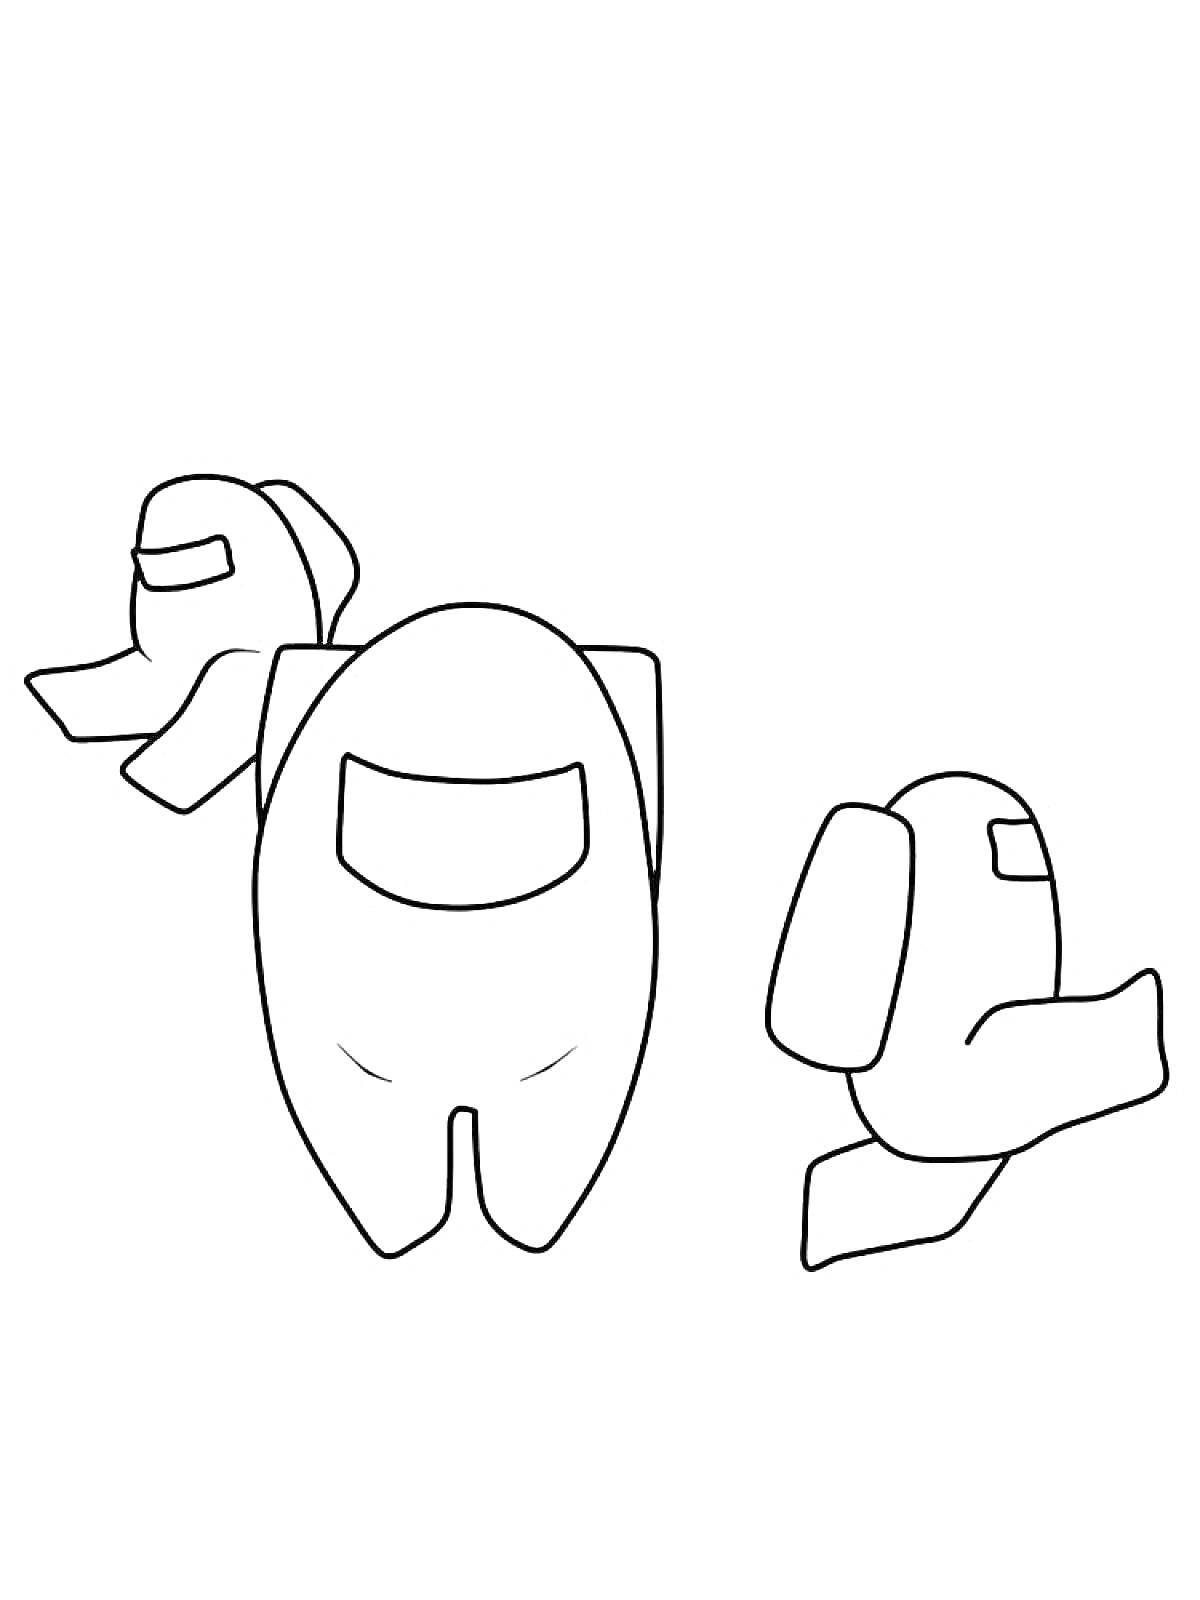 Раскраска Три персонажа Амонг Ас с рюкзаками и иллюминаторами шлемов